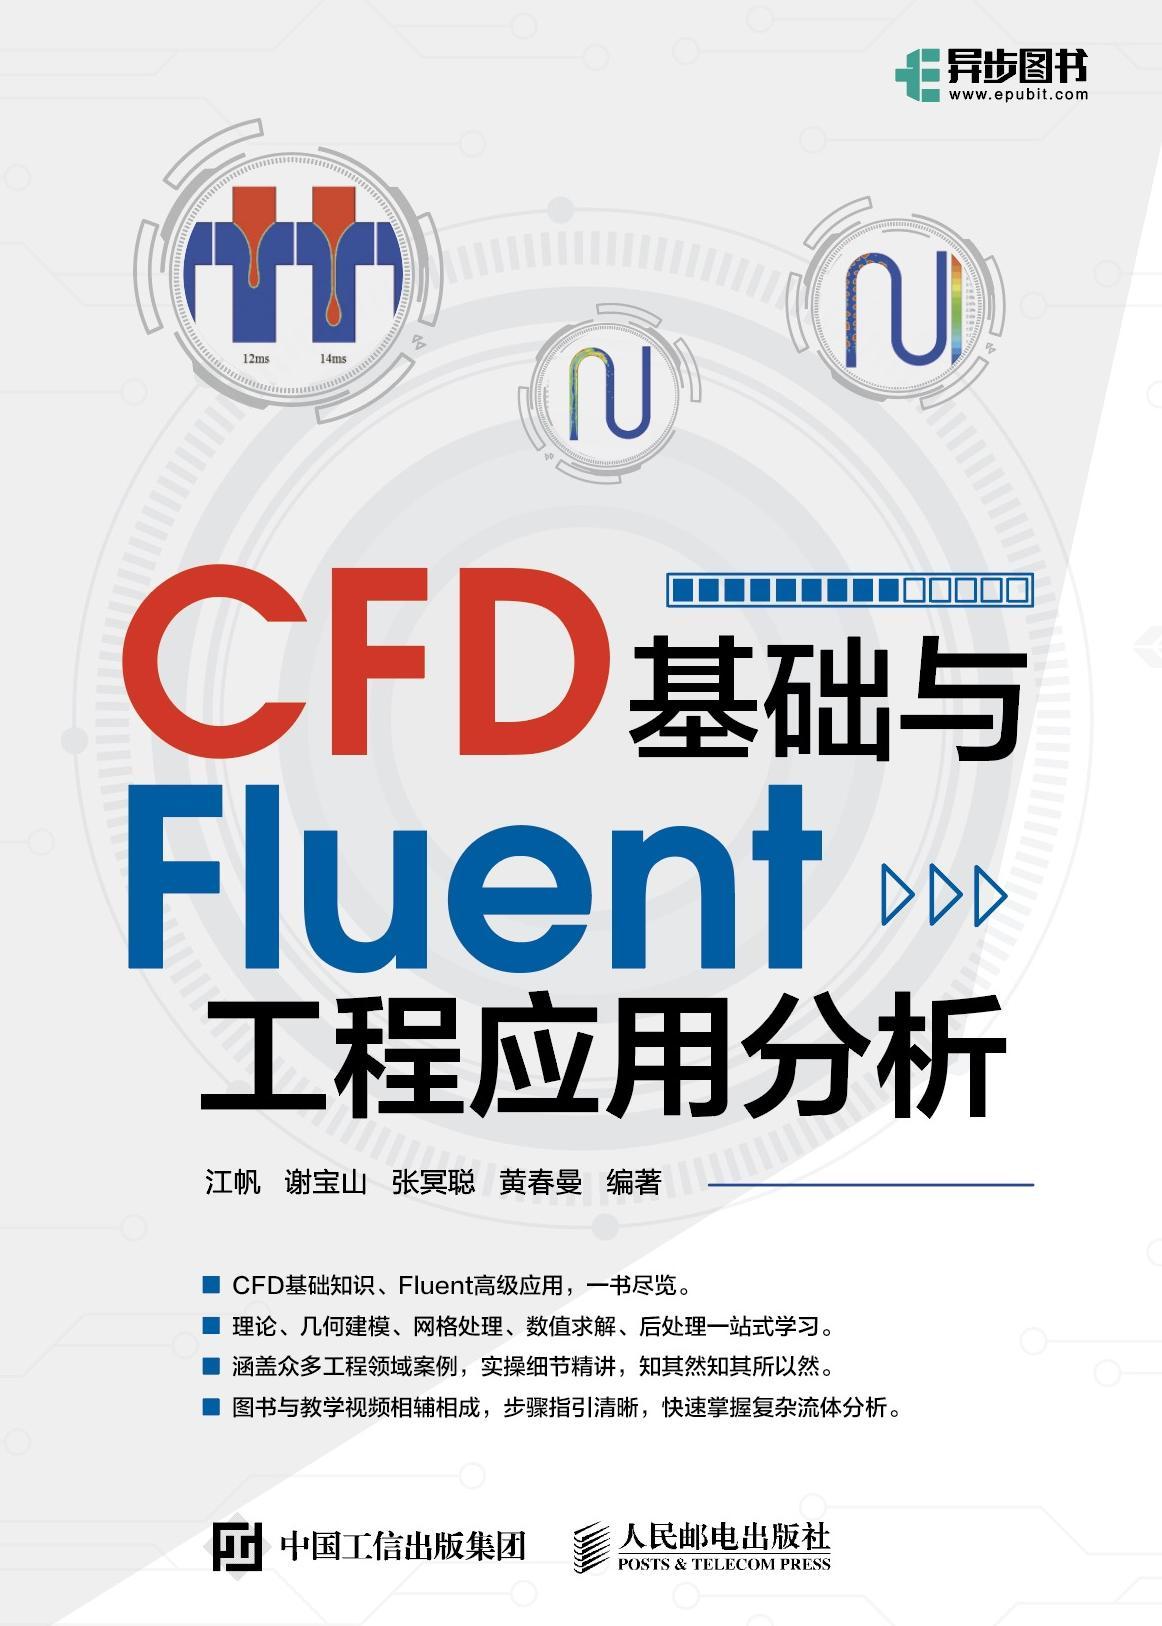 CFD基础与Fluent工程应用分析